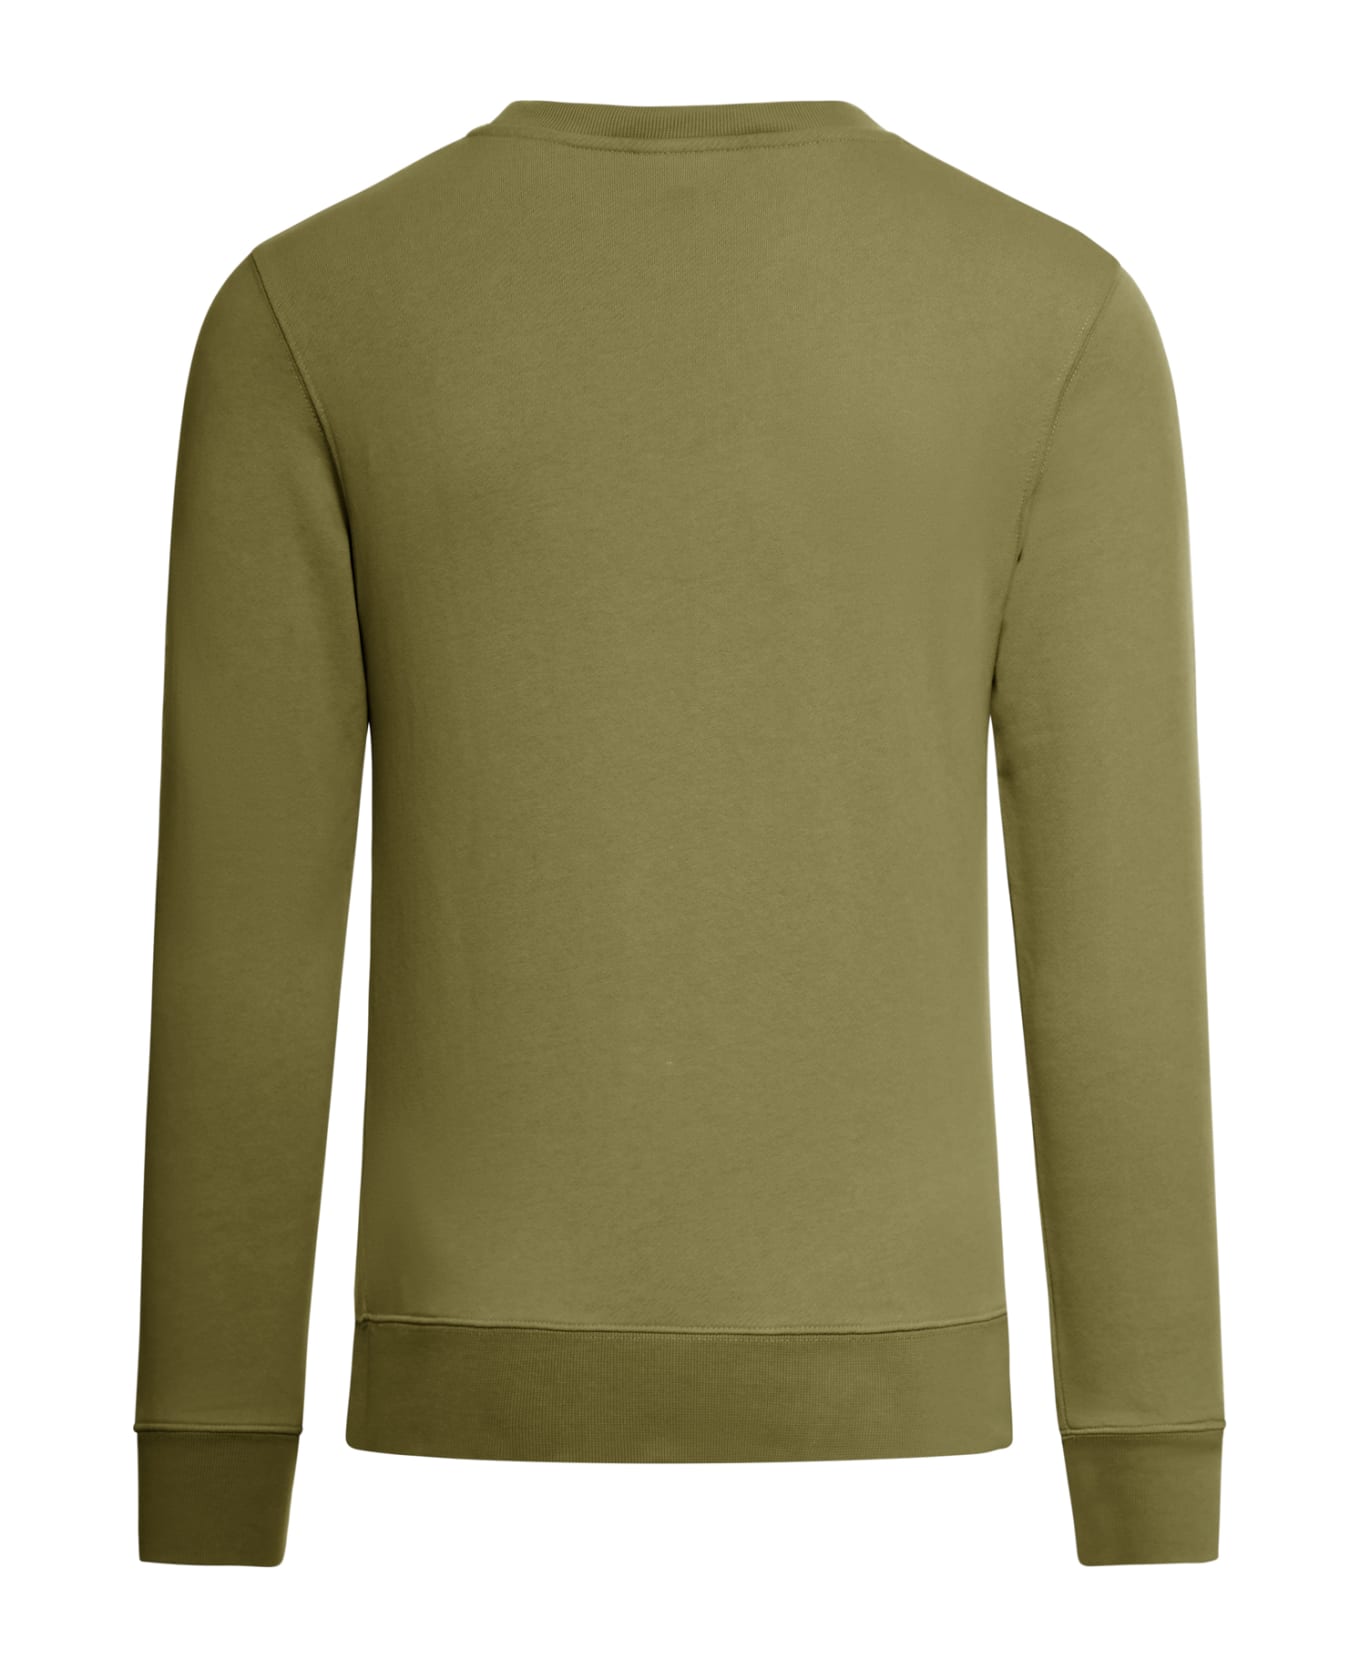 Maison Kitsuné Chillax Patch Regular Sweatshirt - Military Green